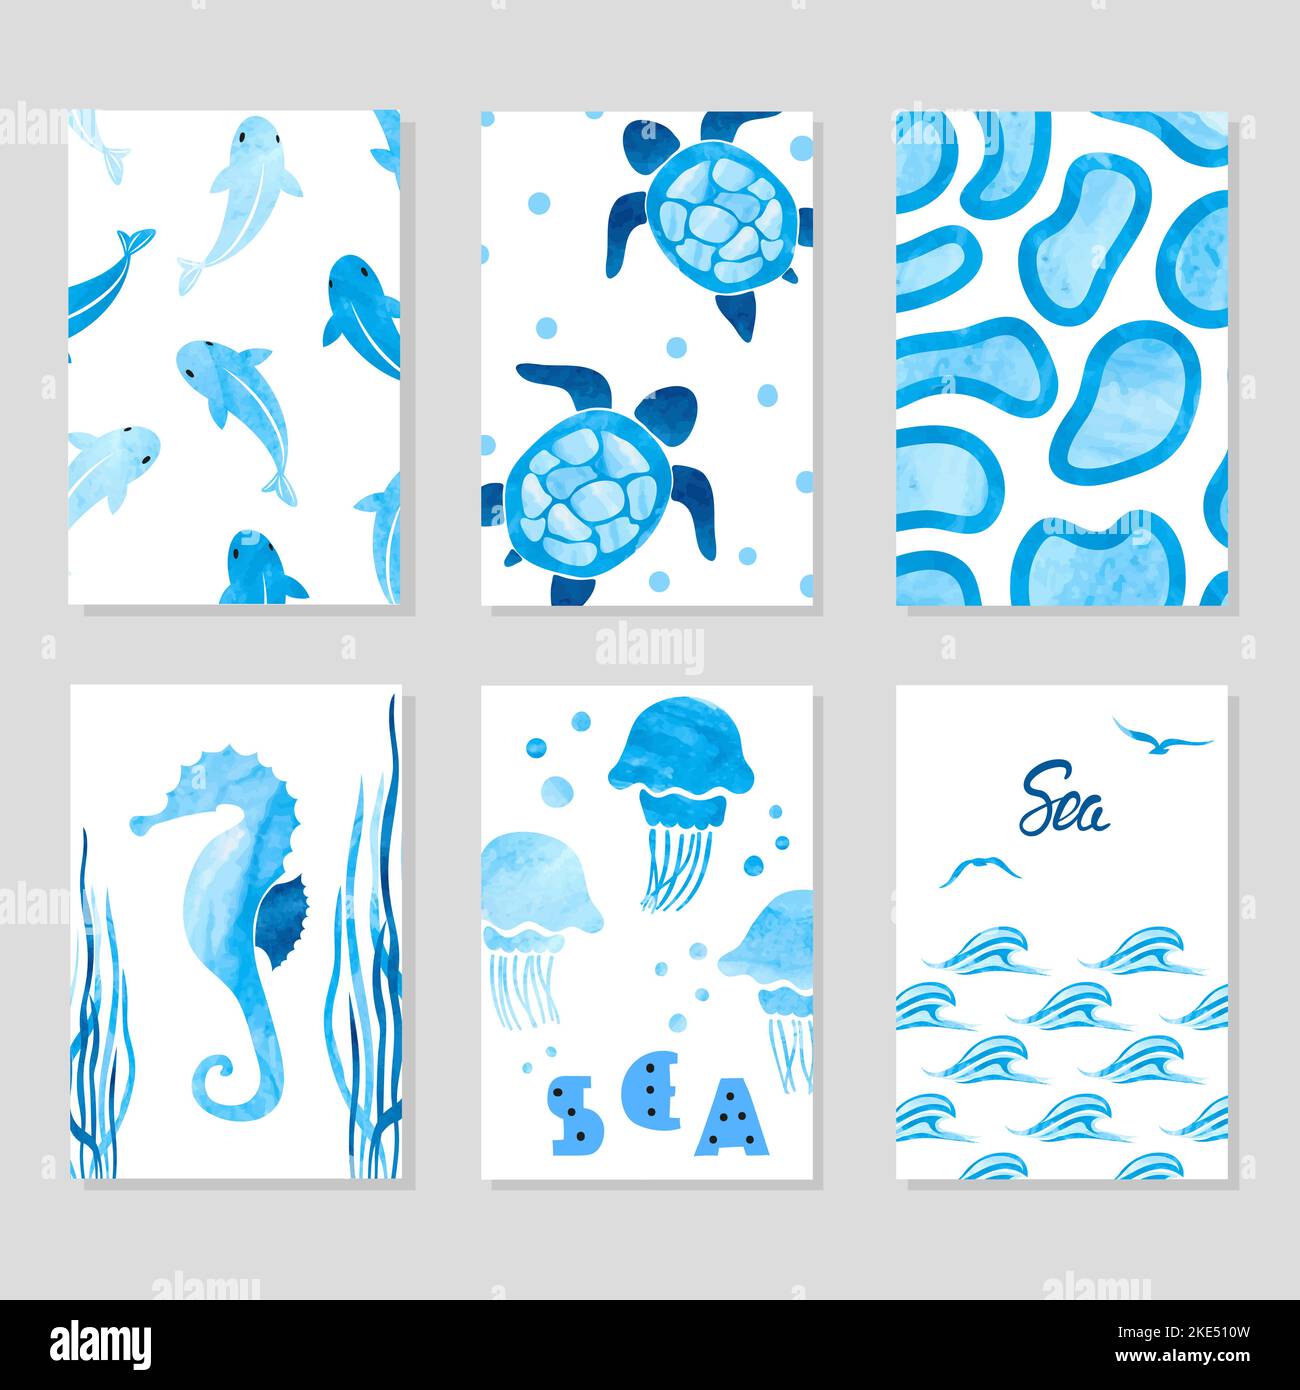 Cartes marines aquarelle de couleur bleue. Thème marin. Illustrations vectorielles de la mer. Illustration de Vecteur